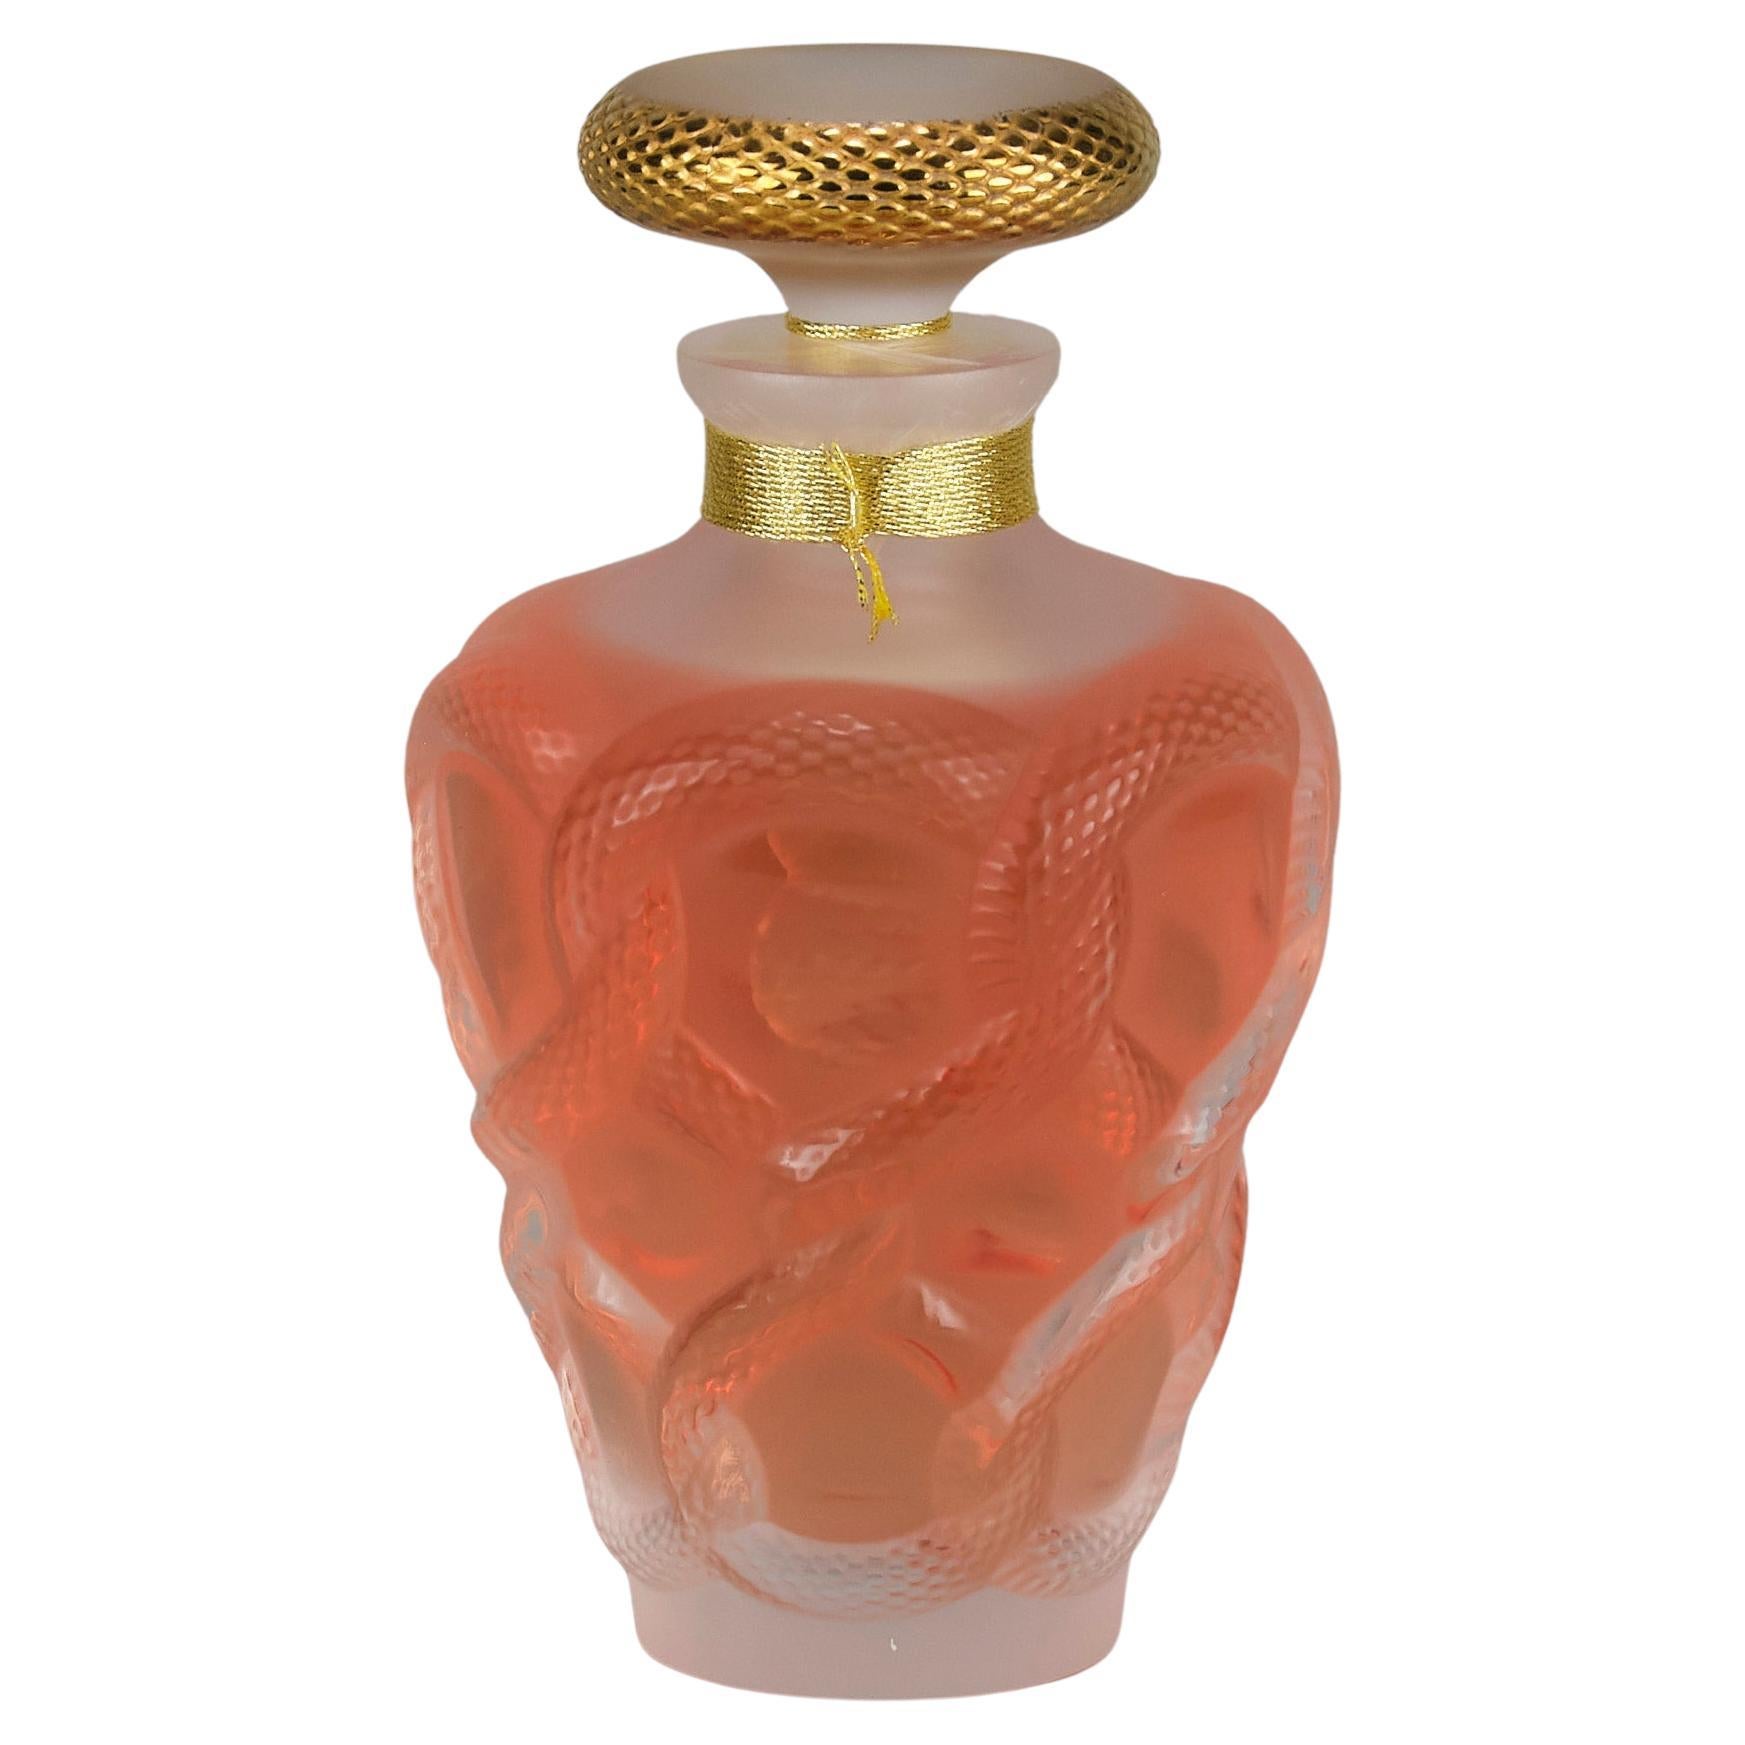 Contemporary Parfümflasche aus mattiertem Glas mit dem Titel 'Séduction' von Lalique